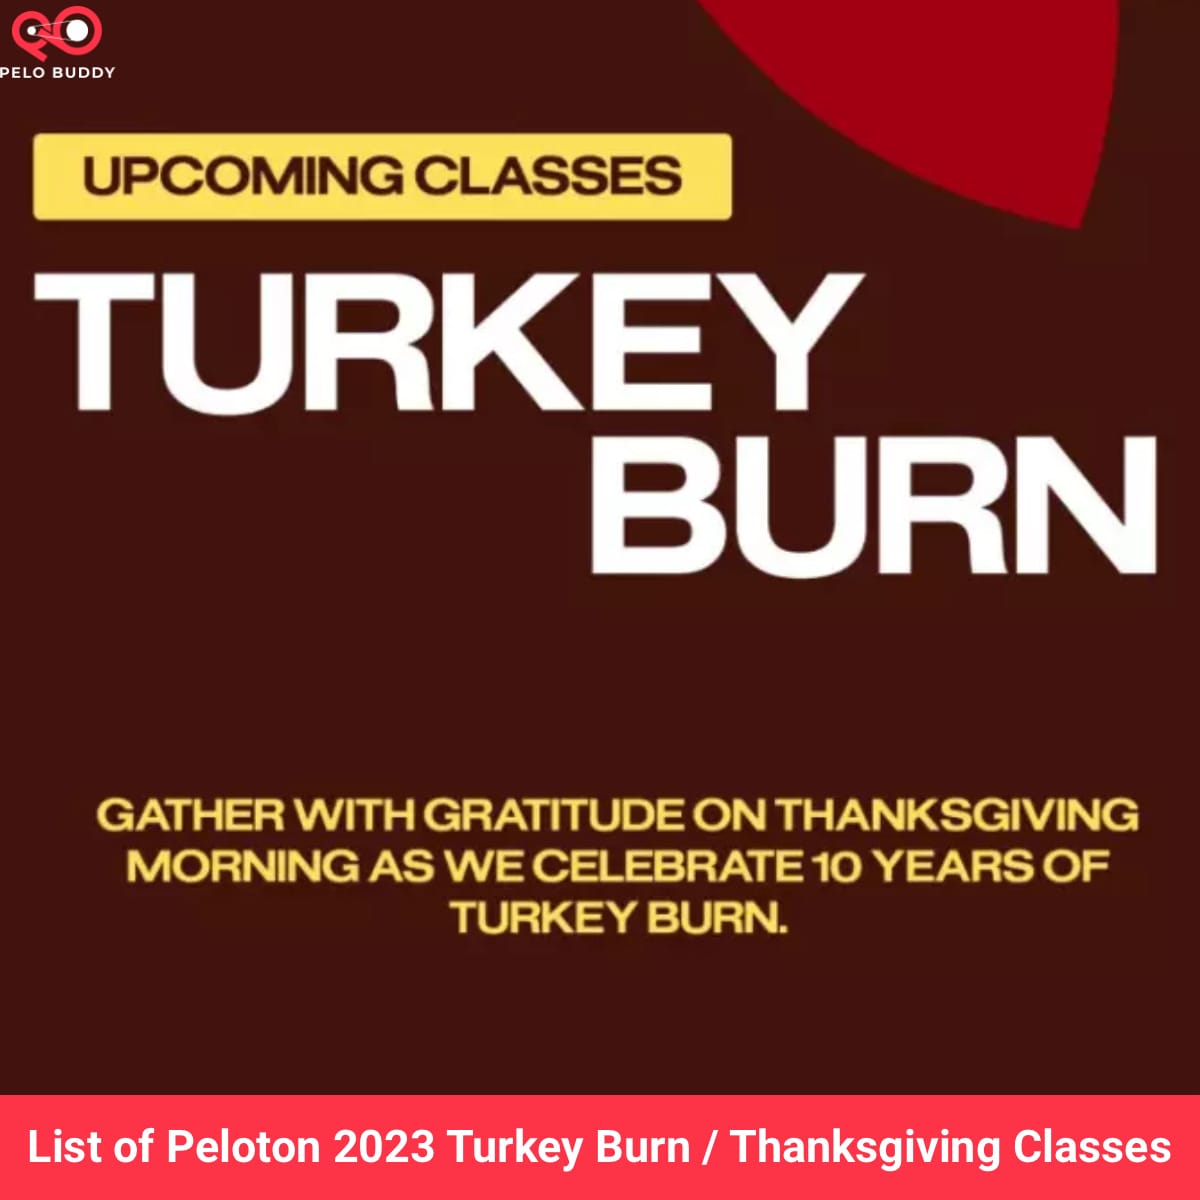 List of Peloton 2023 Turkey Burn Classes / Thanksgiving Classes